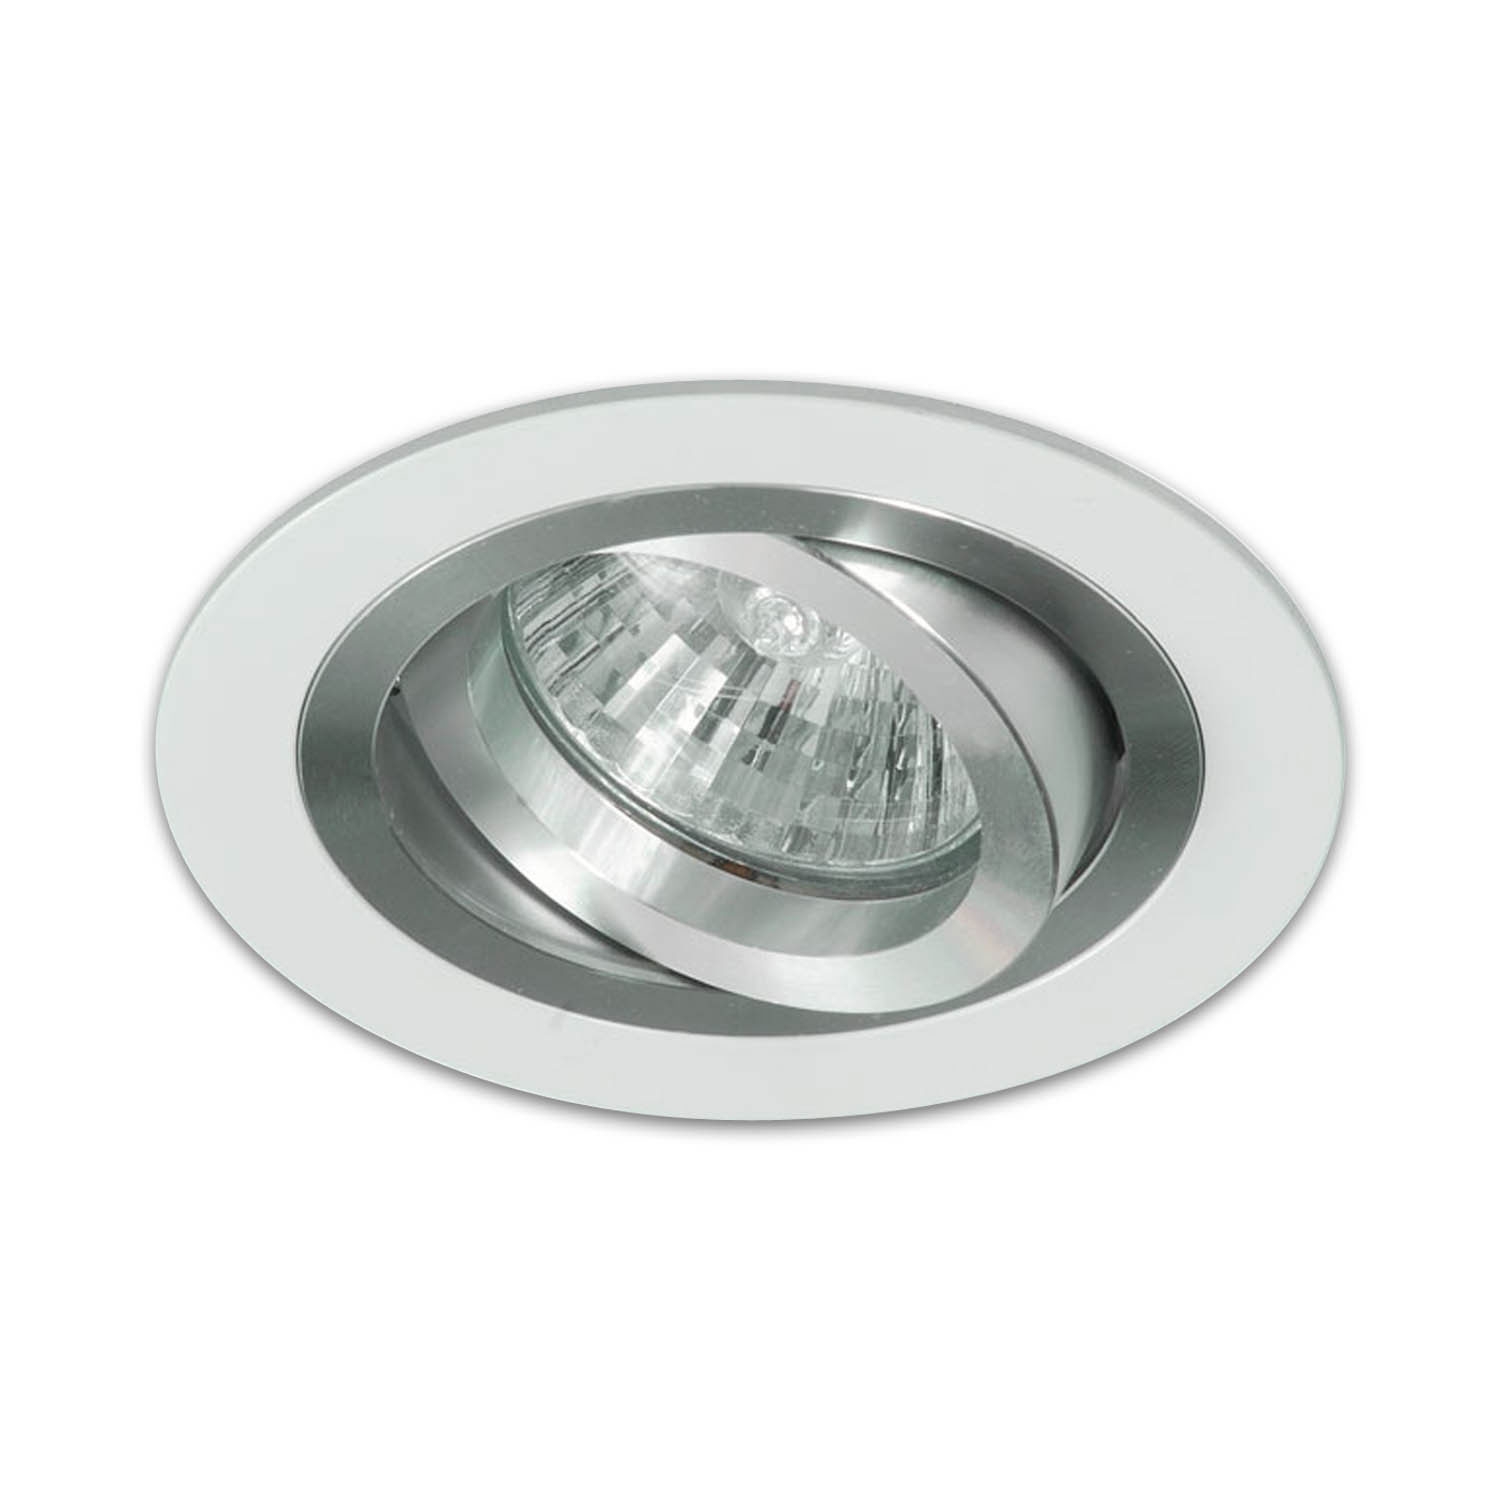 Foco empotrable 202 GU10 LED circular acero inox - Maslighting